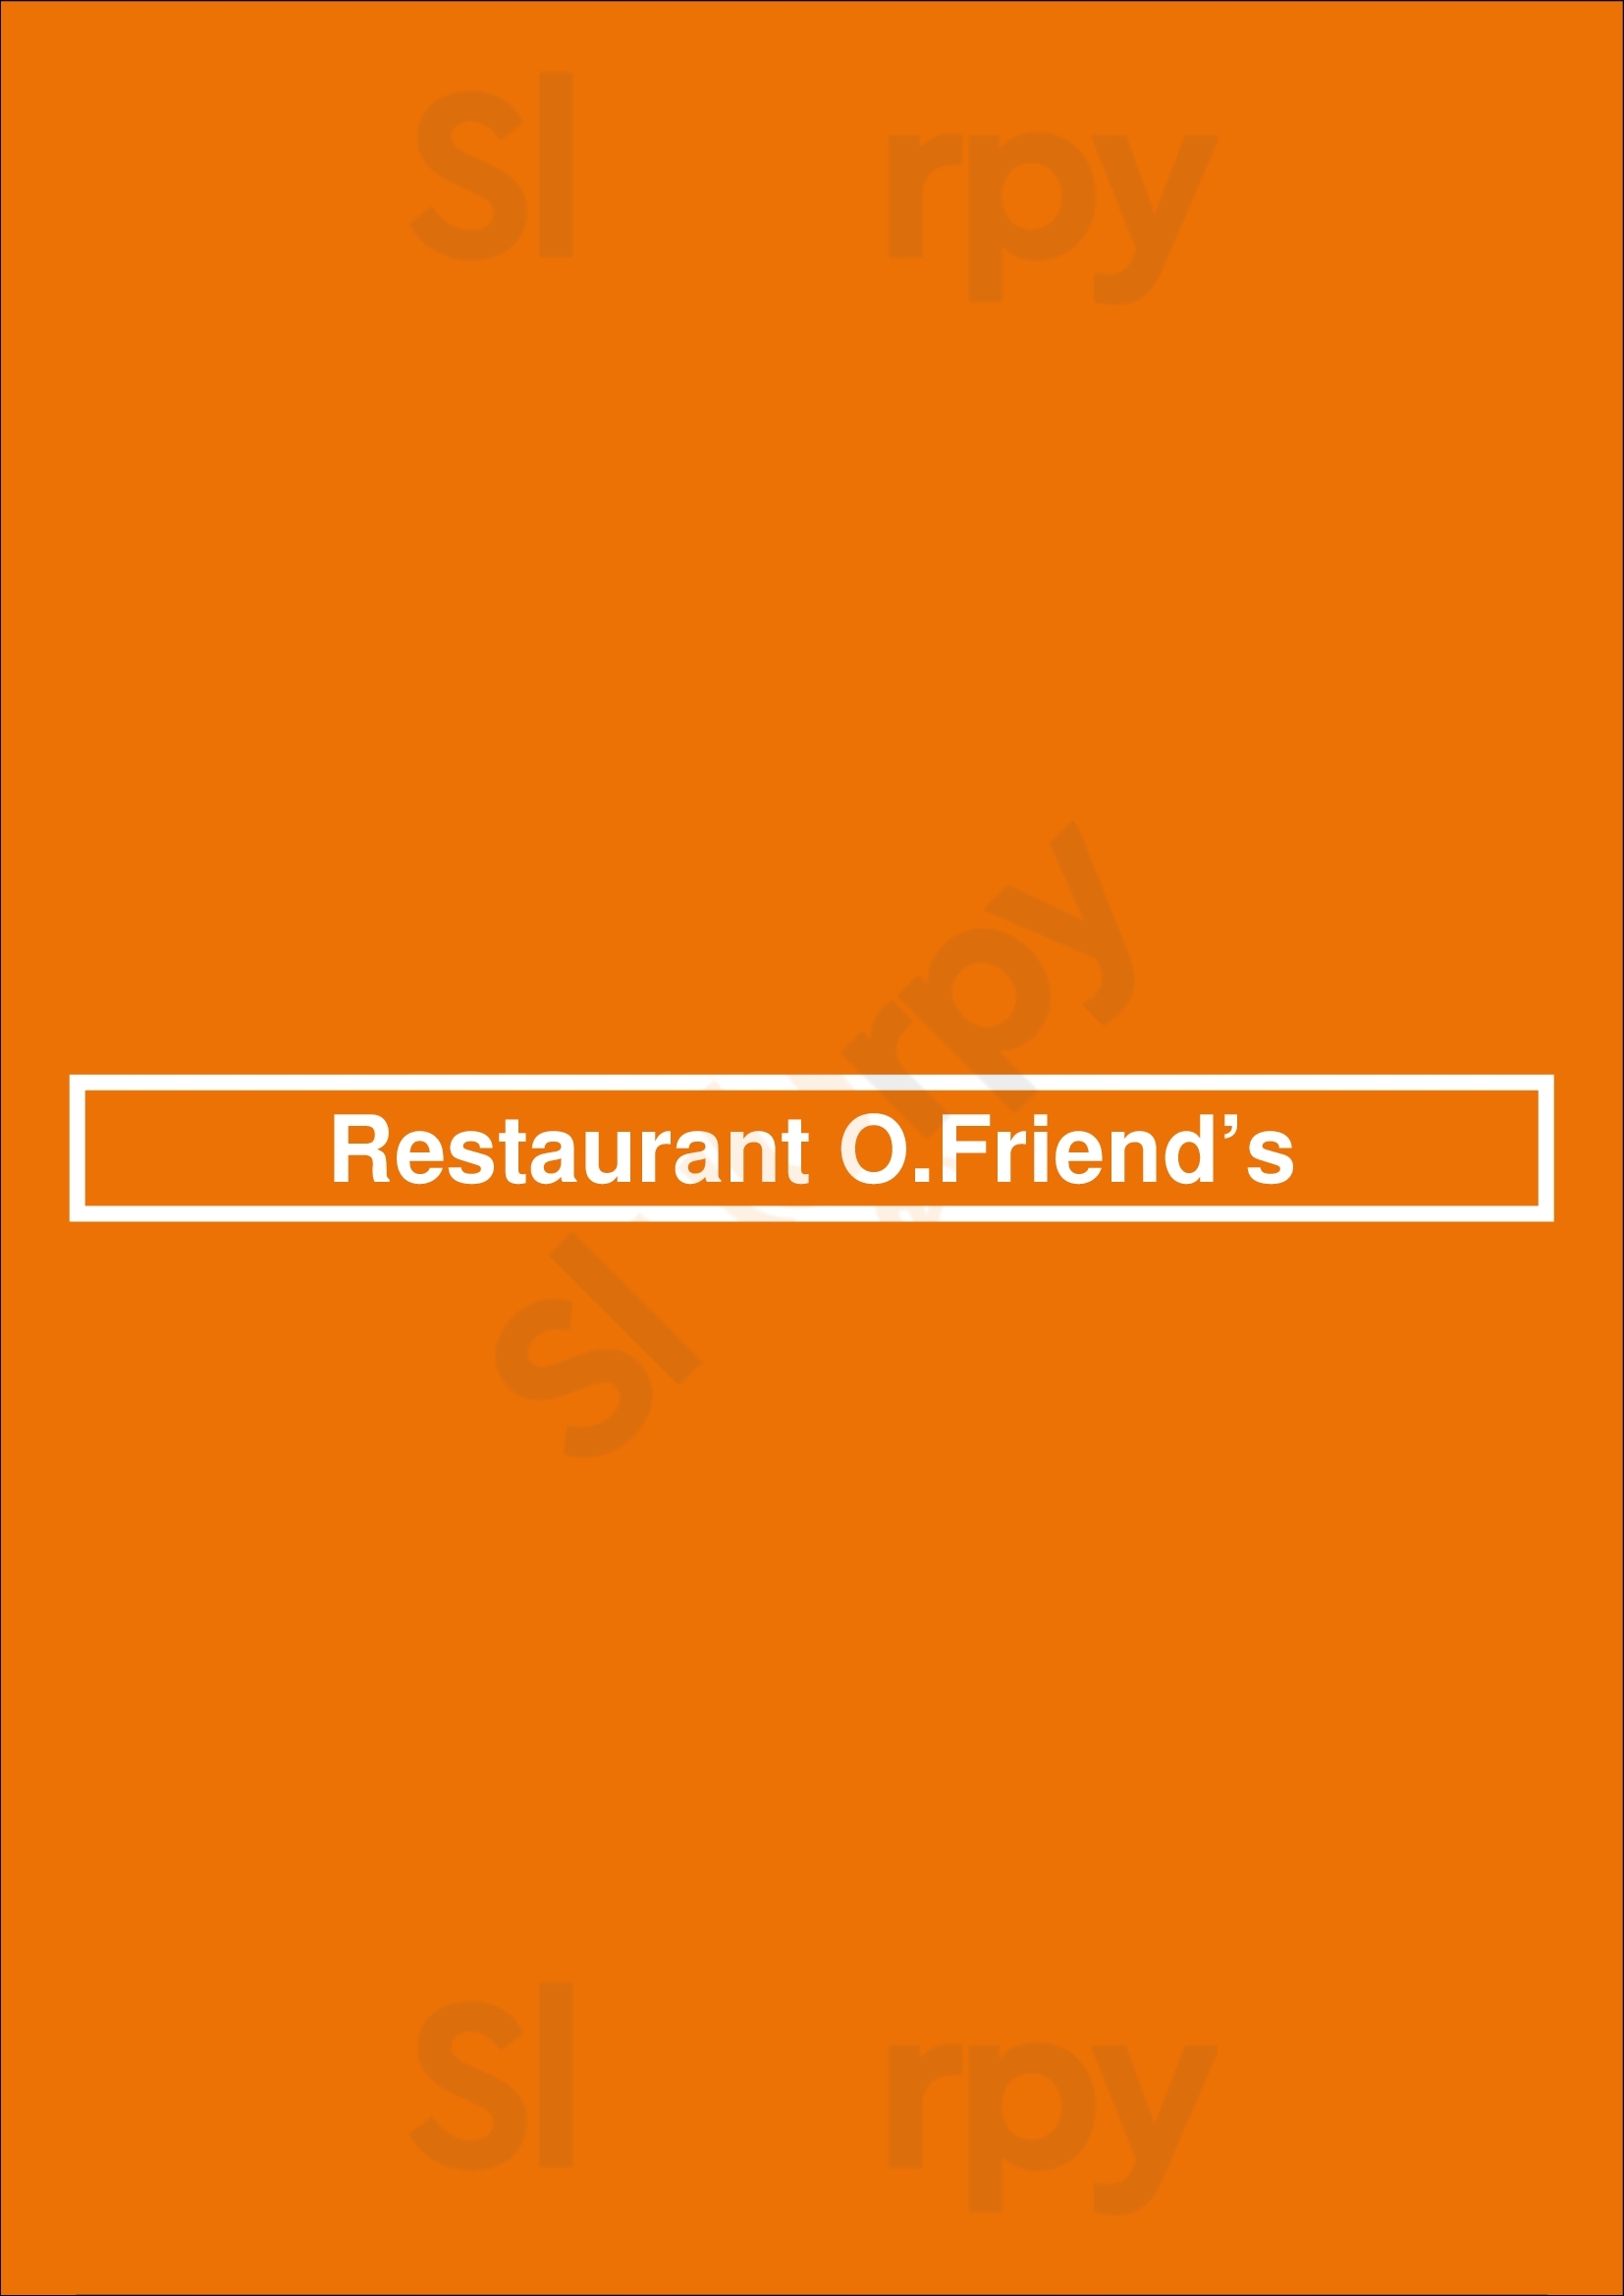 Restaurant O.friend’s Strasbourg Menu - 1